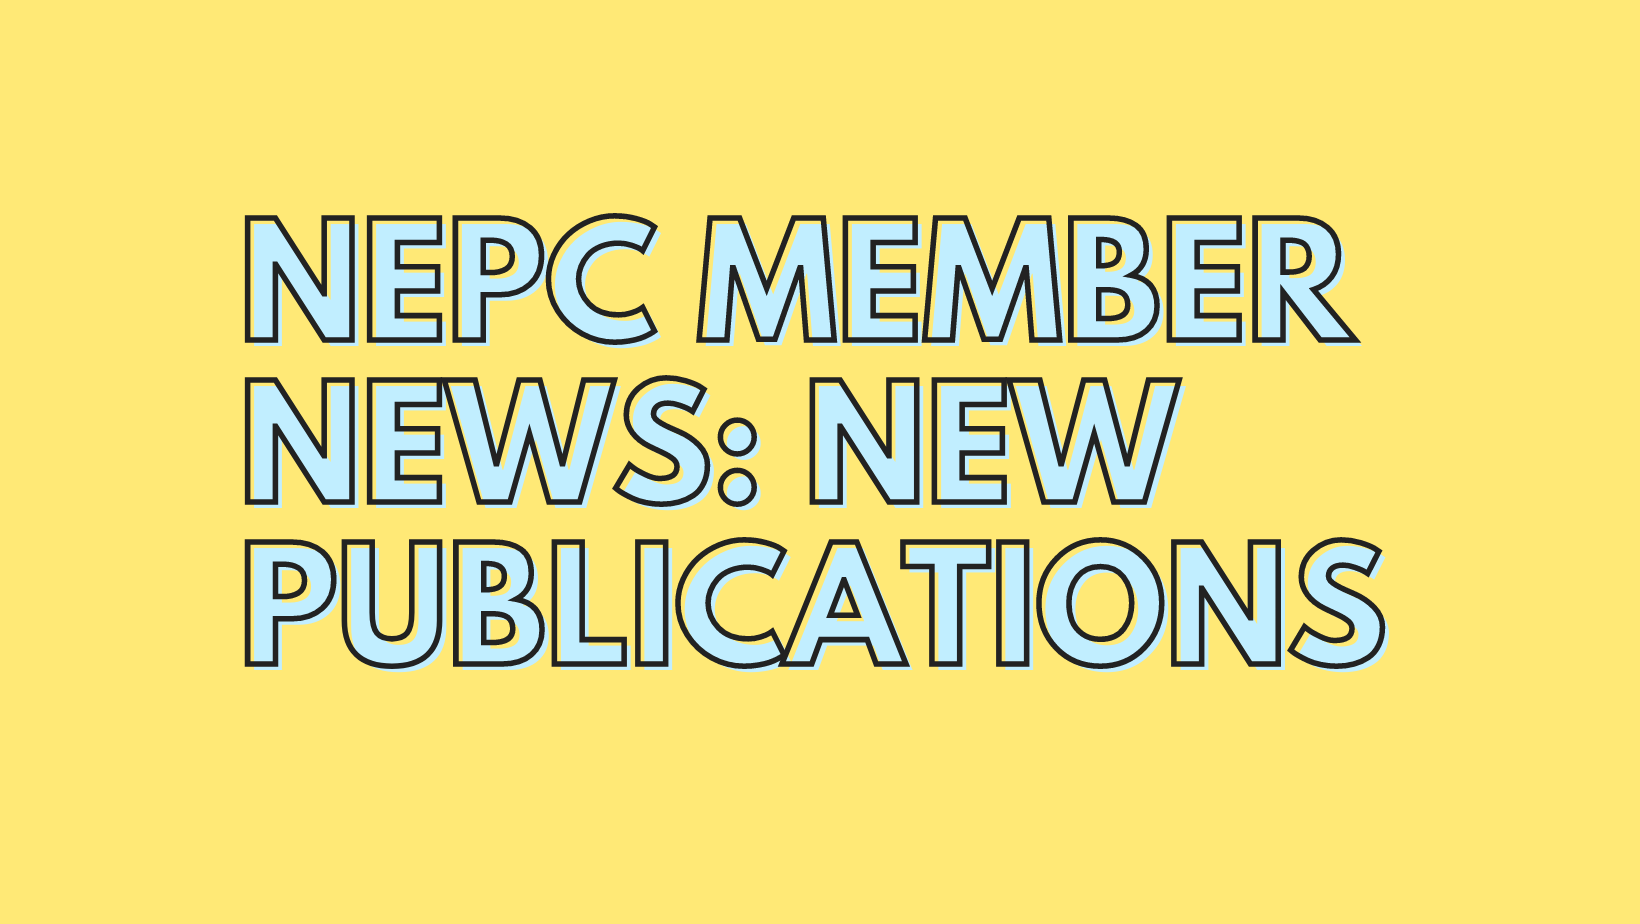 Member Publication News for August 2022